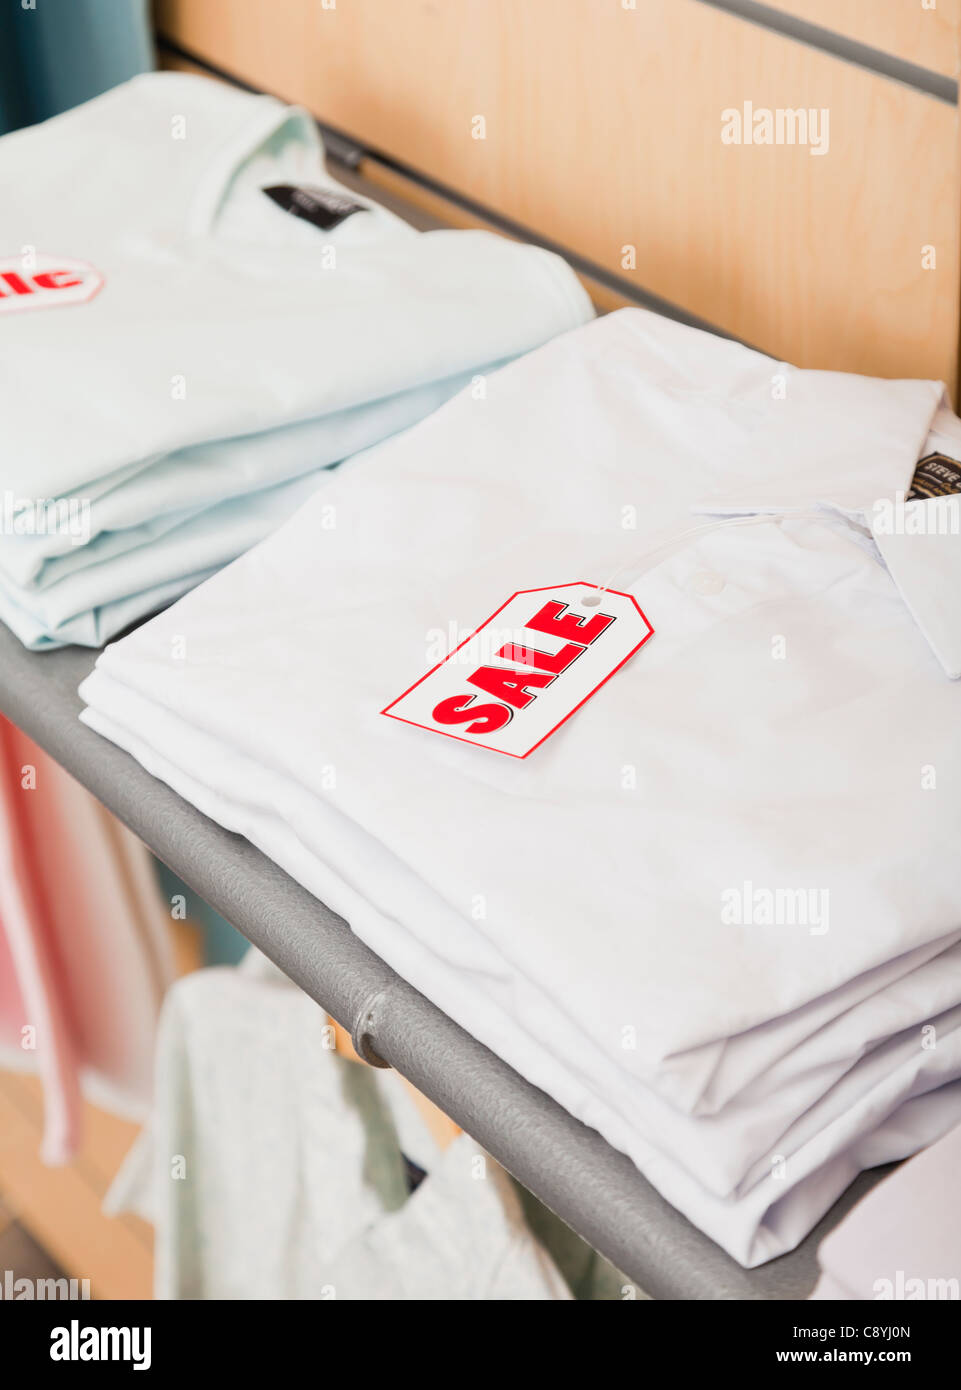 USA, Illinois, Metamora, Sale tag on folded shirts in shop Stock Photo